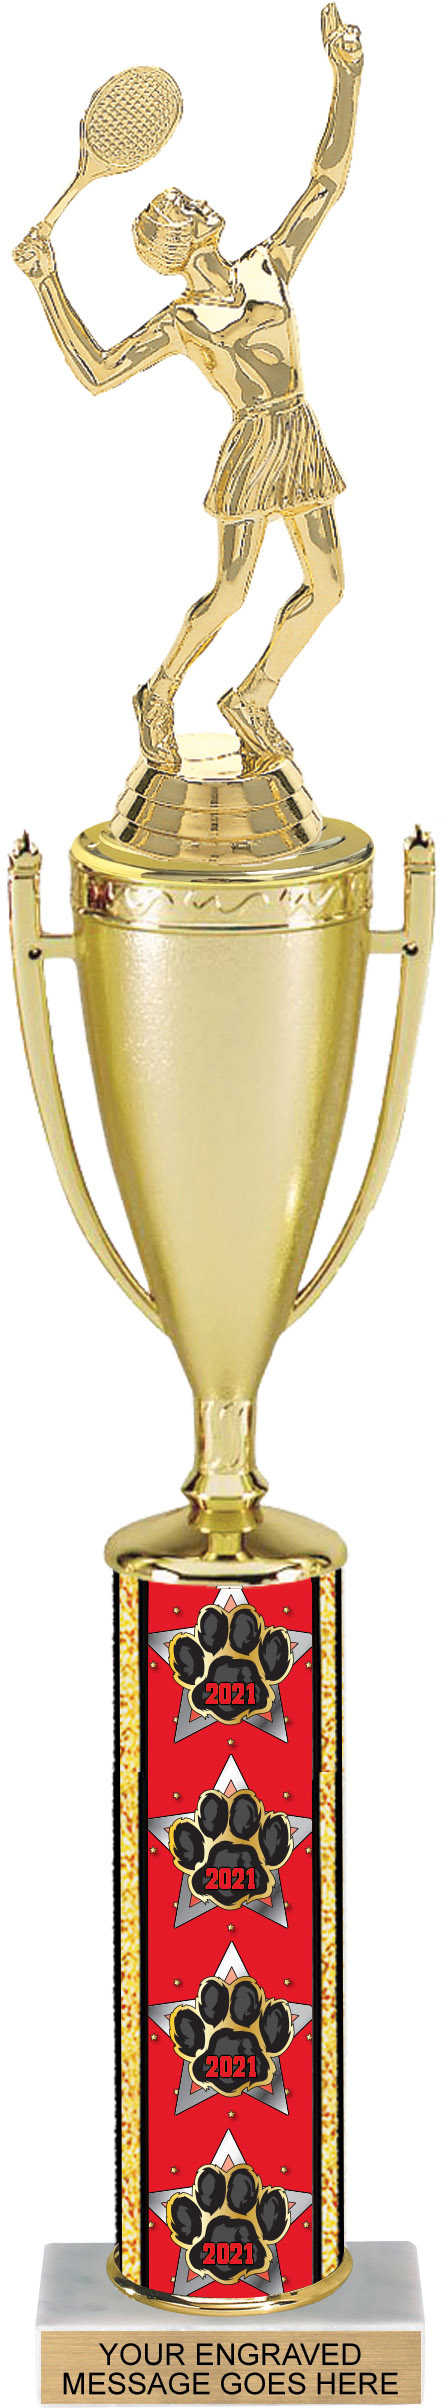 Paw Year Column Cup Trophy - 17 inch